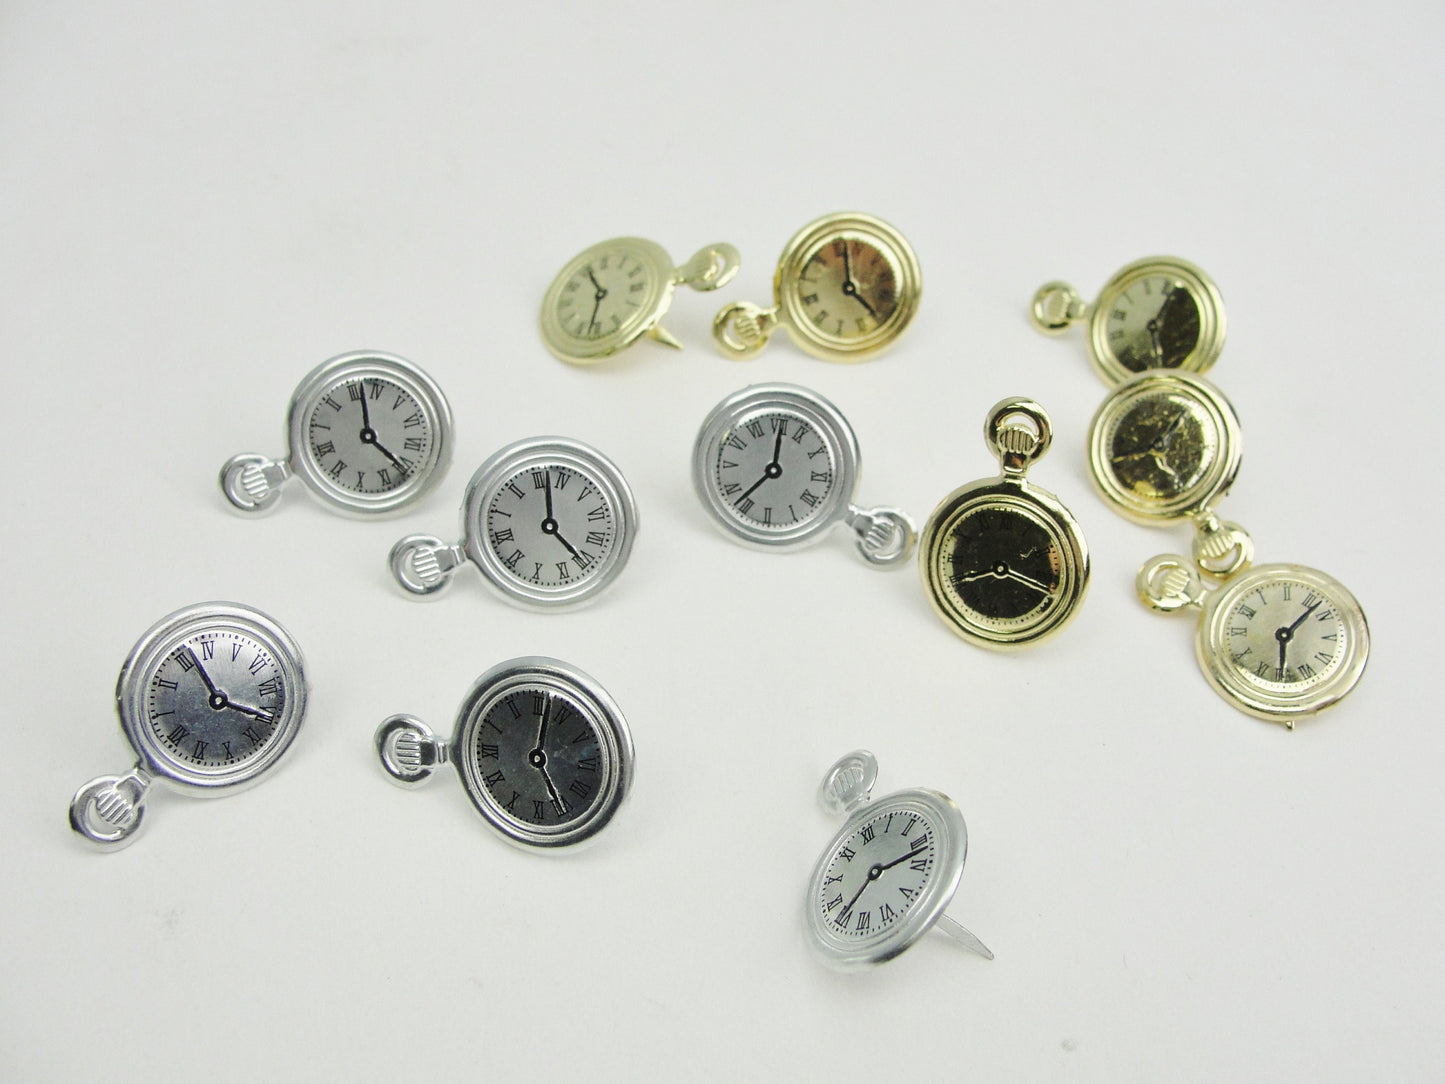 Steampunk theme brads paper fasteners choose pocket watch, gears, eye glasses, compass, wizard